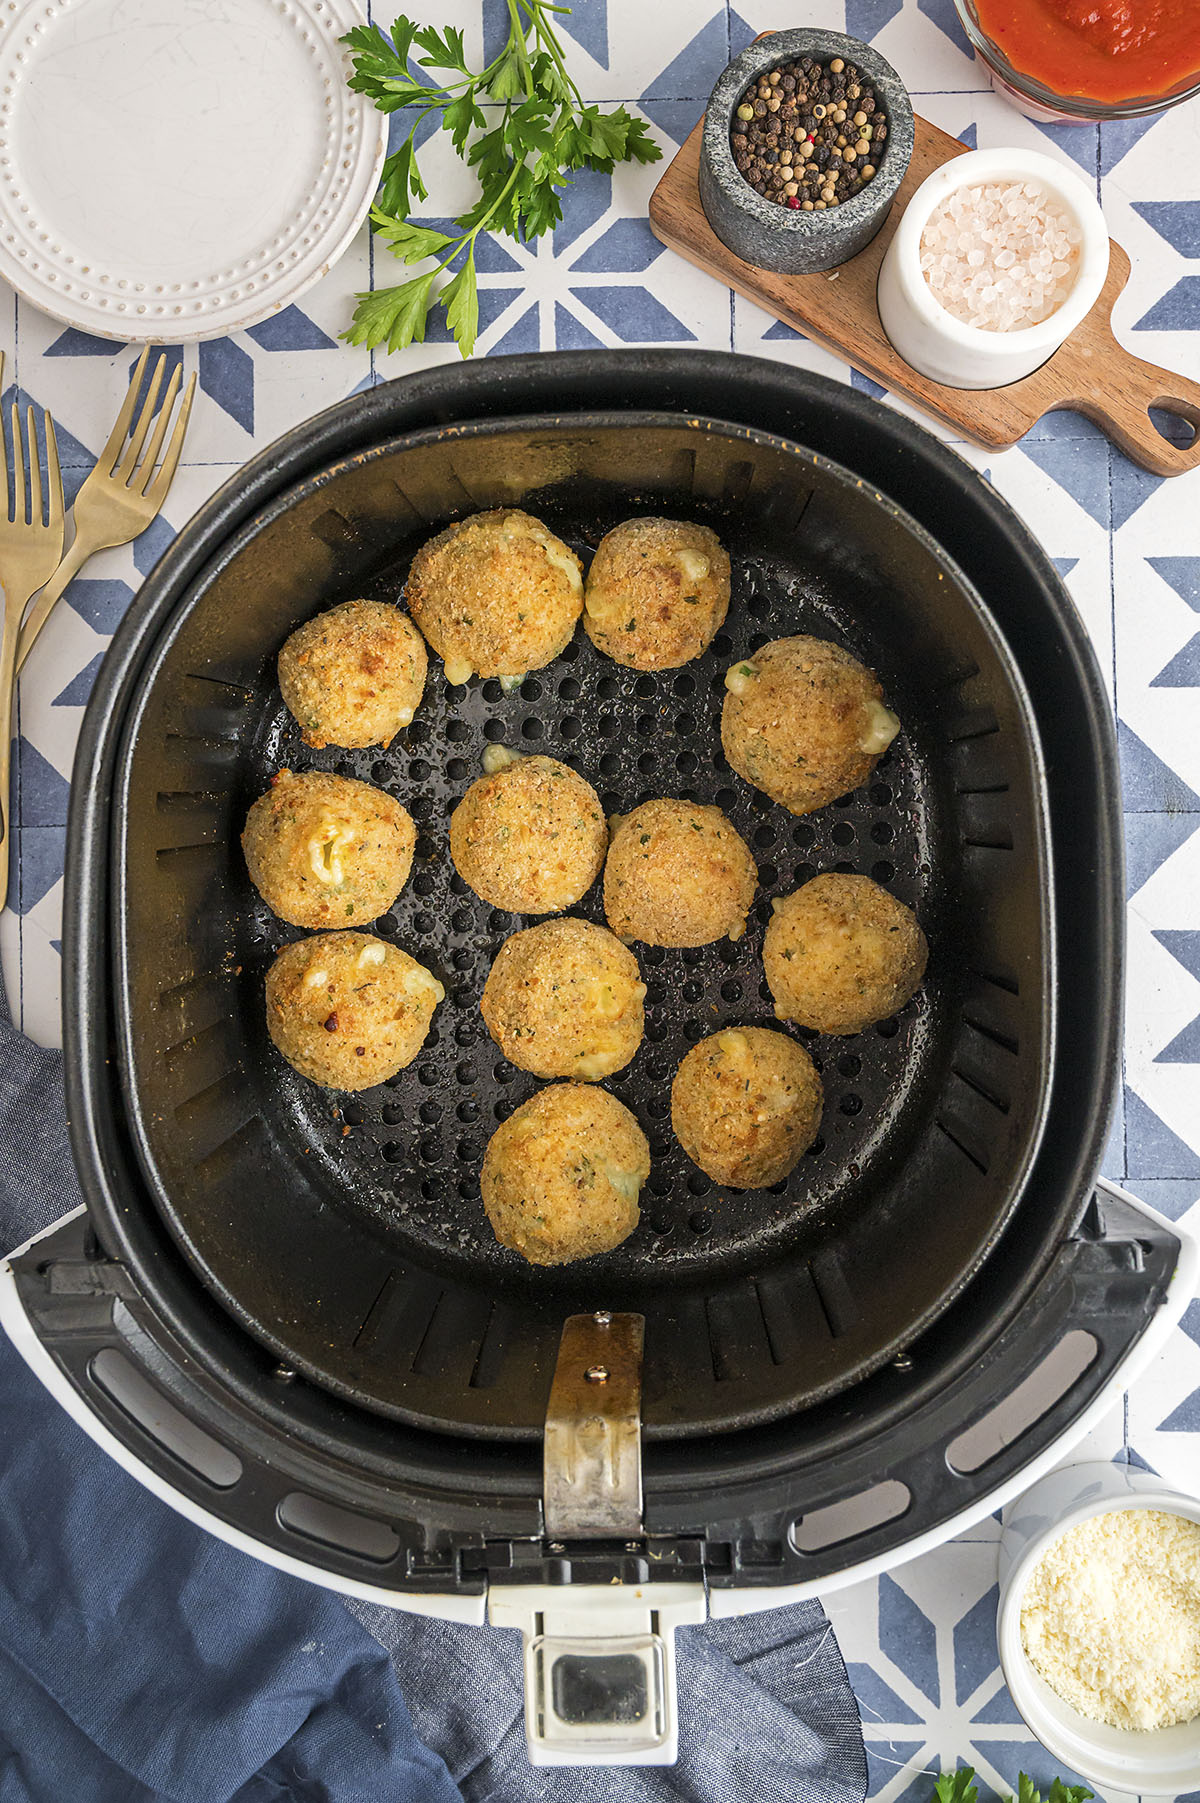 Arancini balls in an air fryer basket.